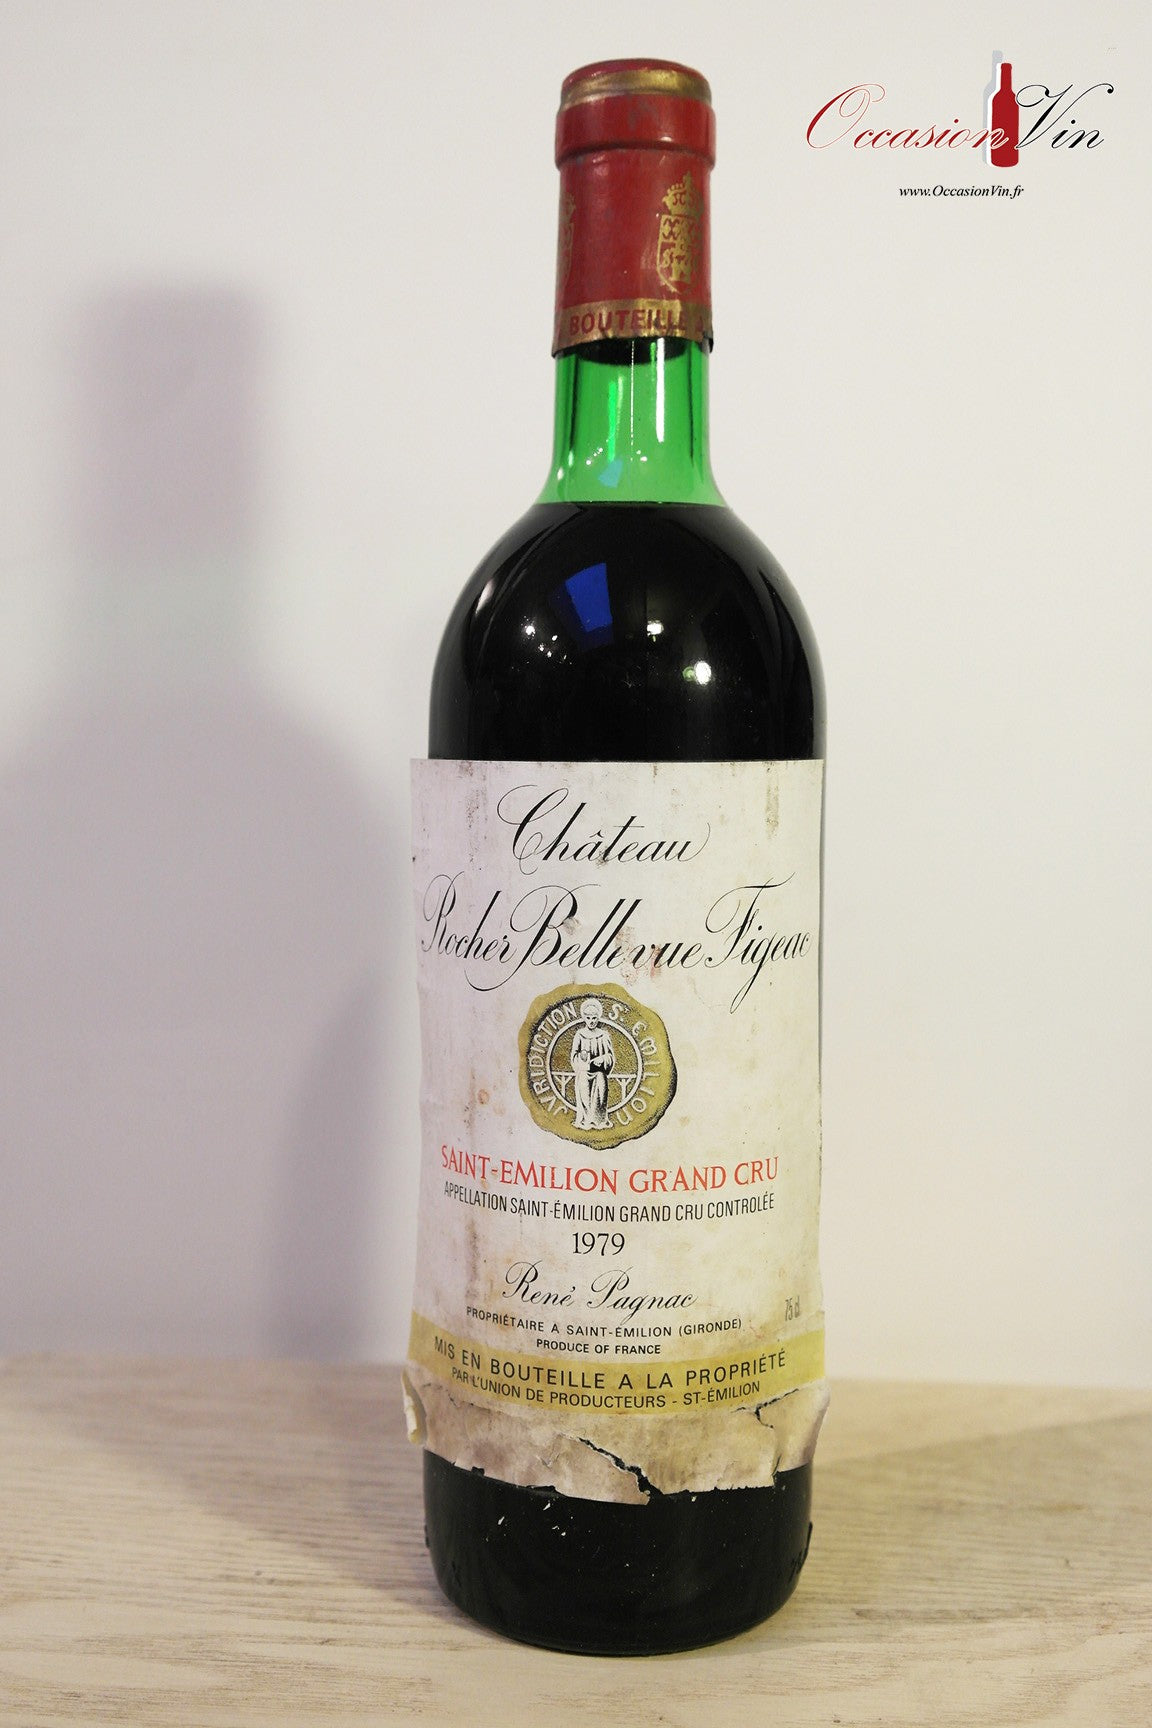 Château Rocher Bellevue Figeac Vin 1979